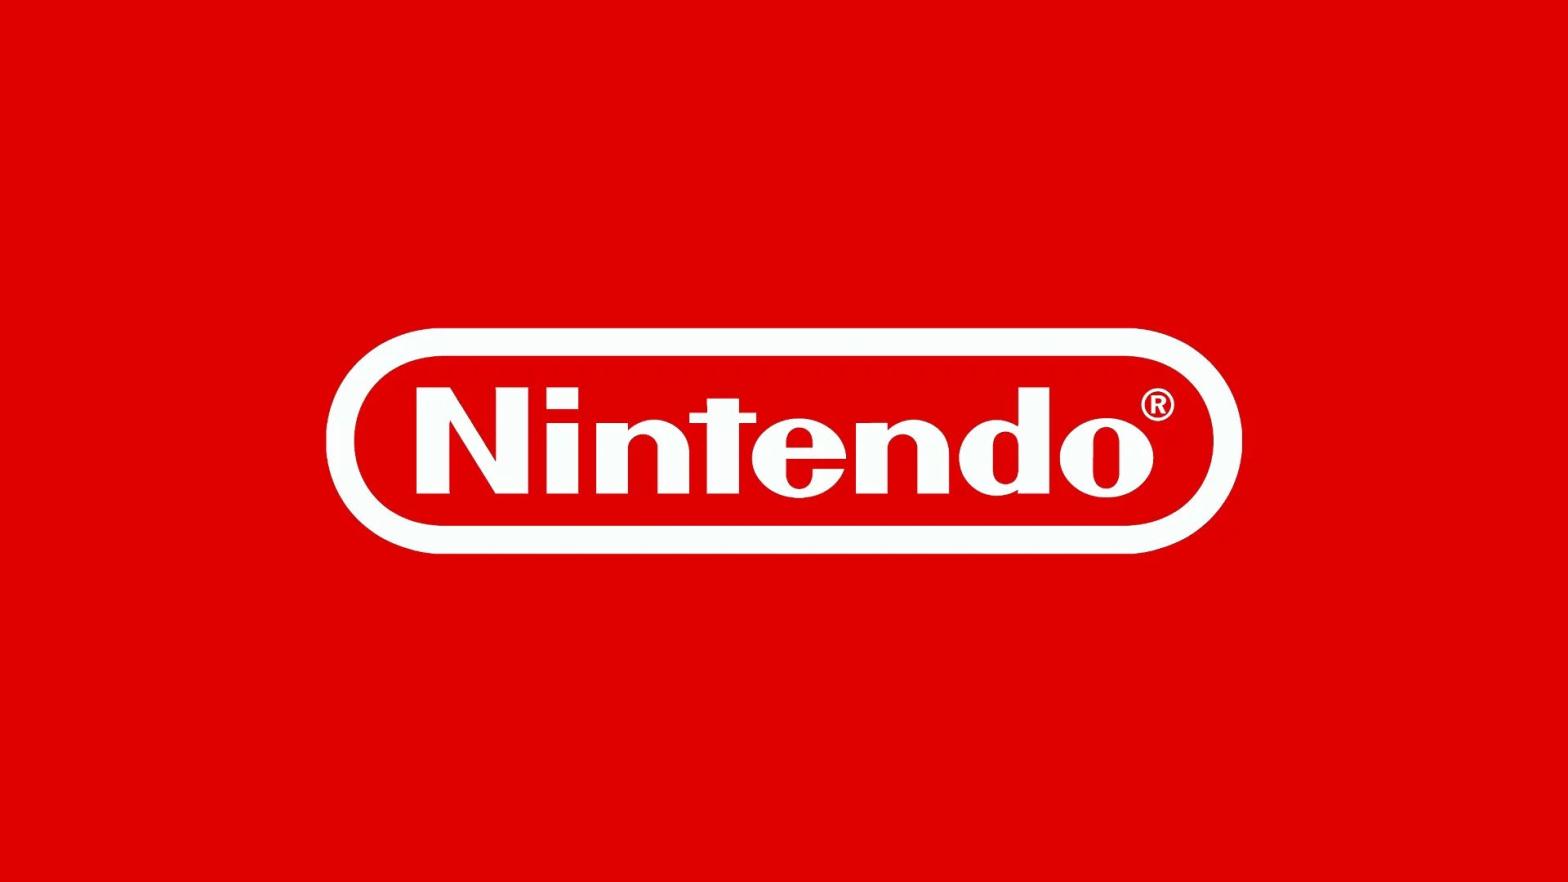 Image: Nintendo